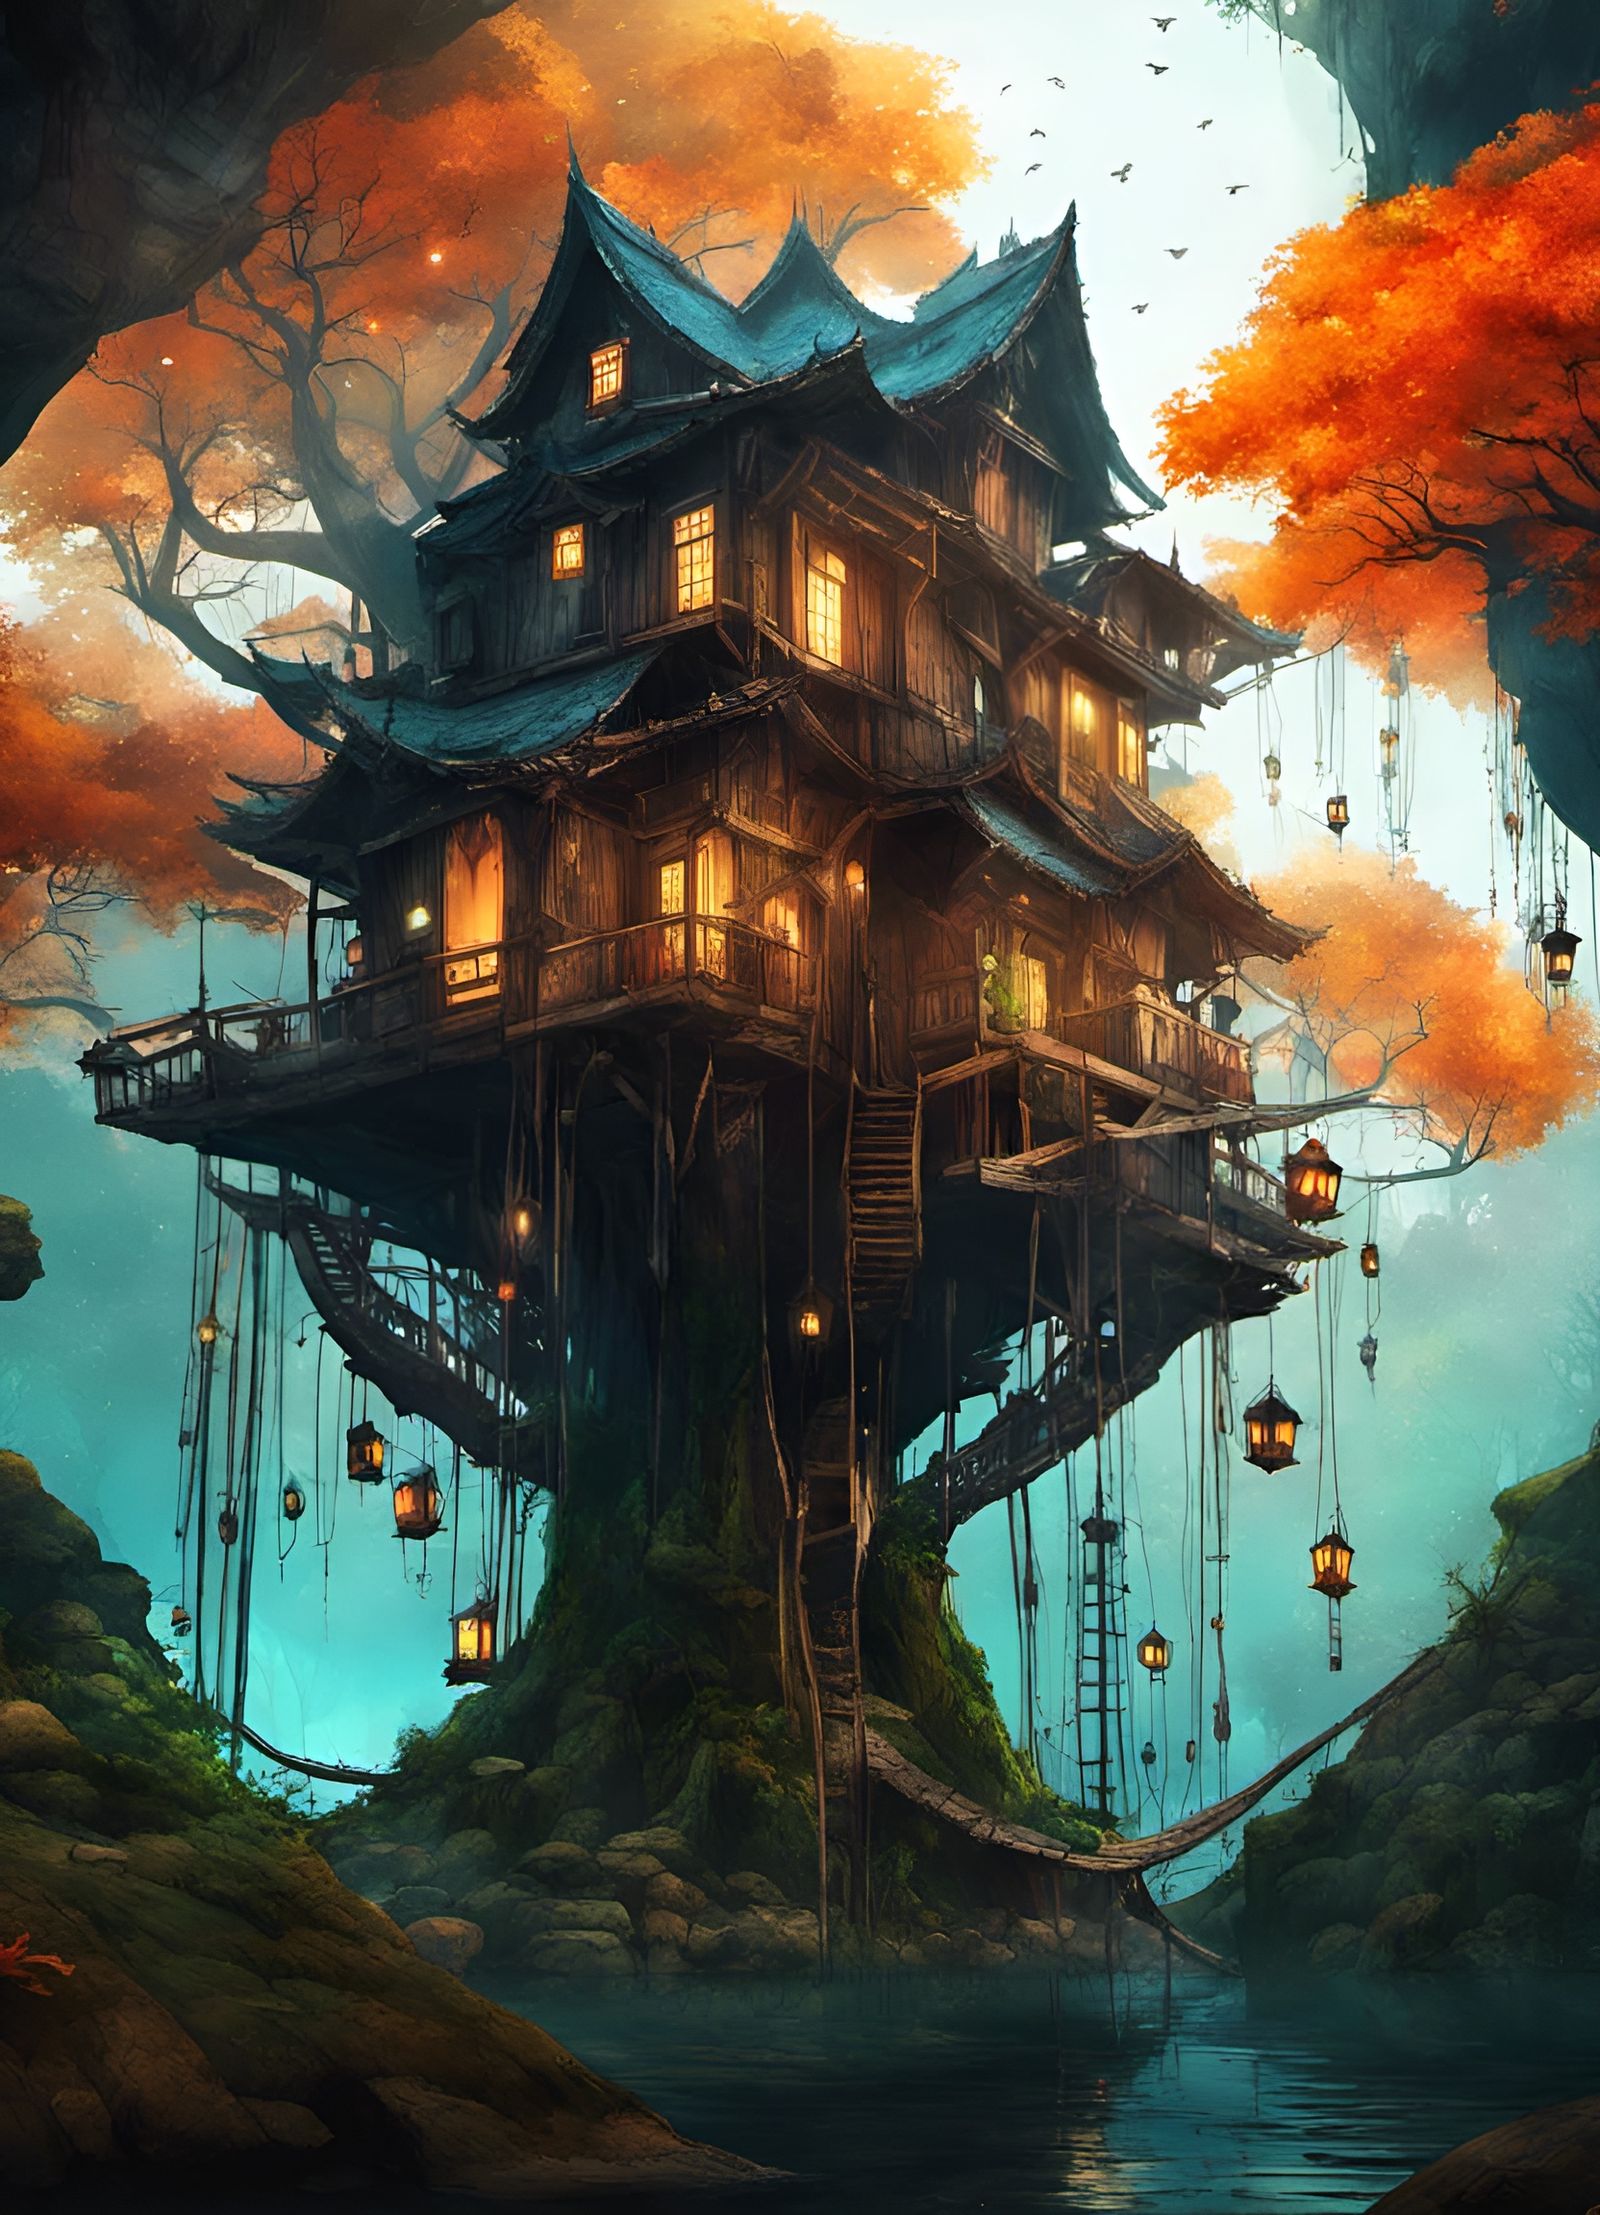 The House of Many Lanterns